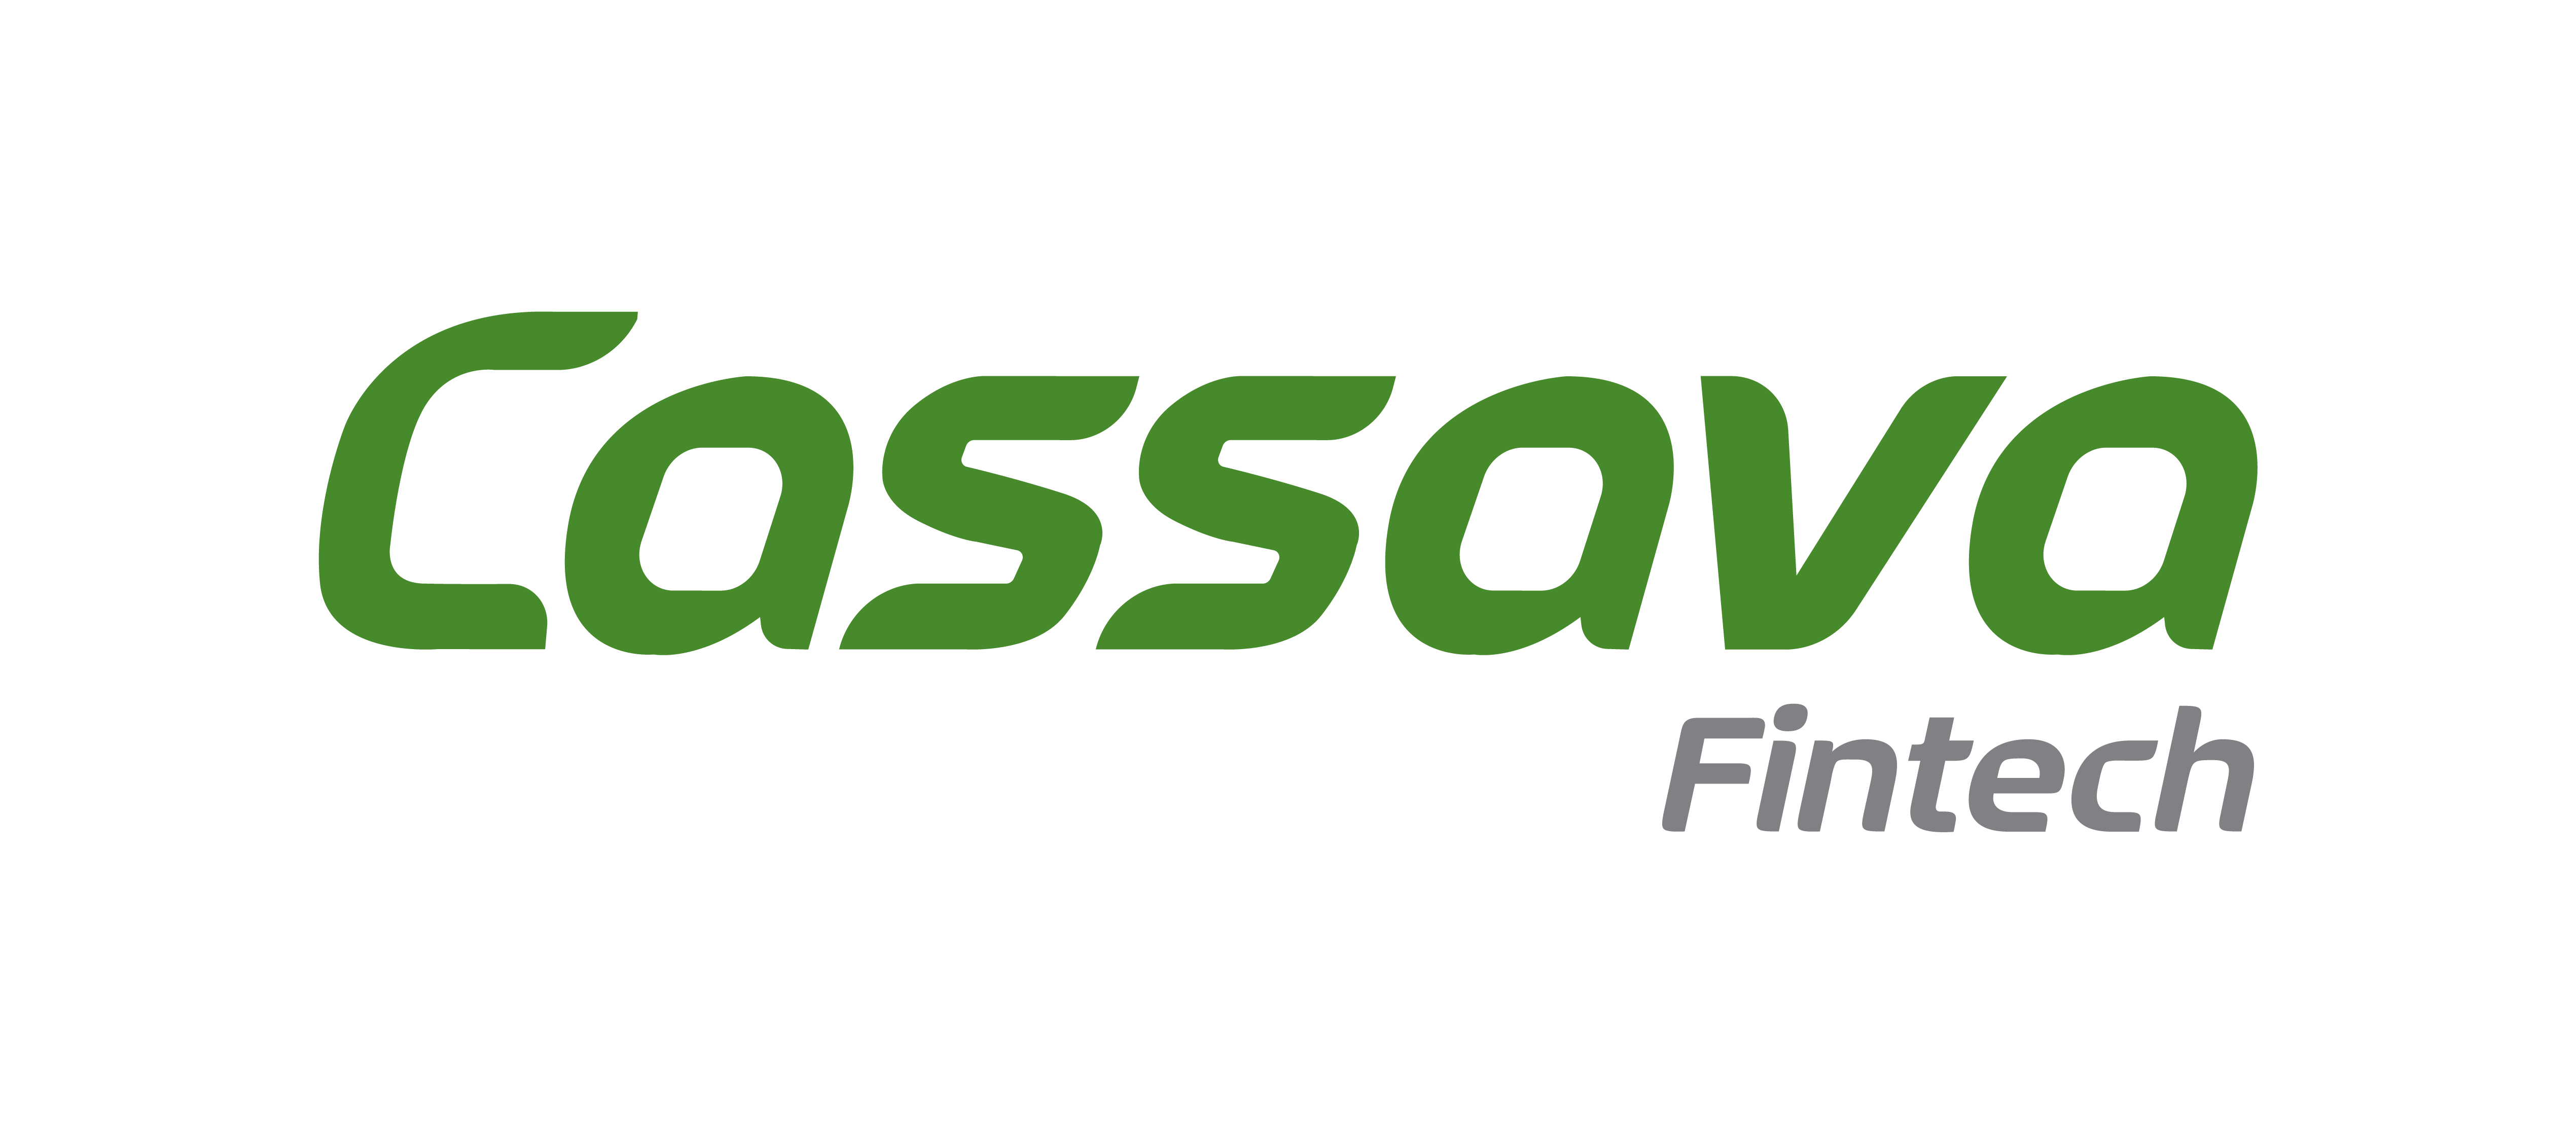 Cassava enters the Zimbabwe market at $3.8 billion